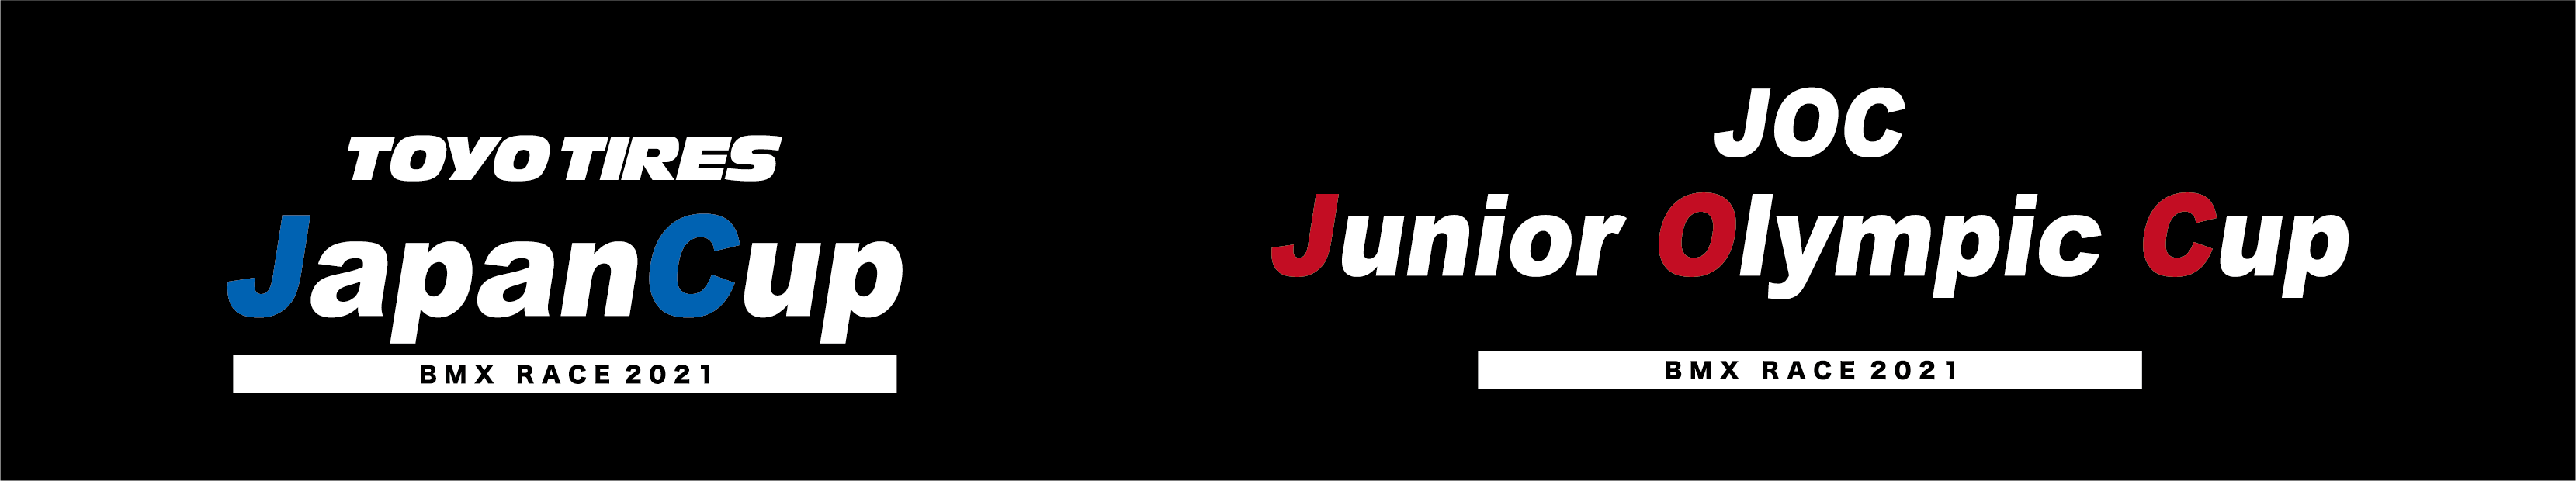 Japan Cup – JOC Junior Olympic Cup BMX Race 2021